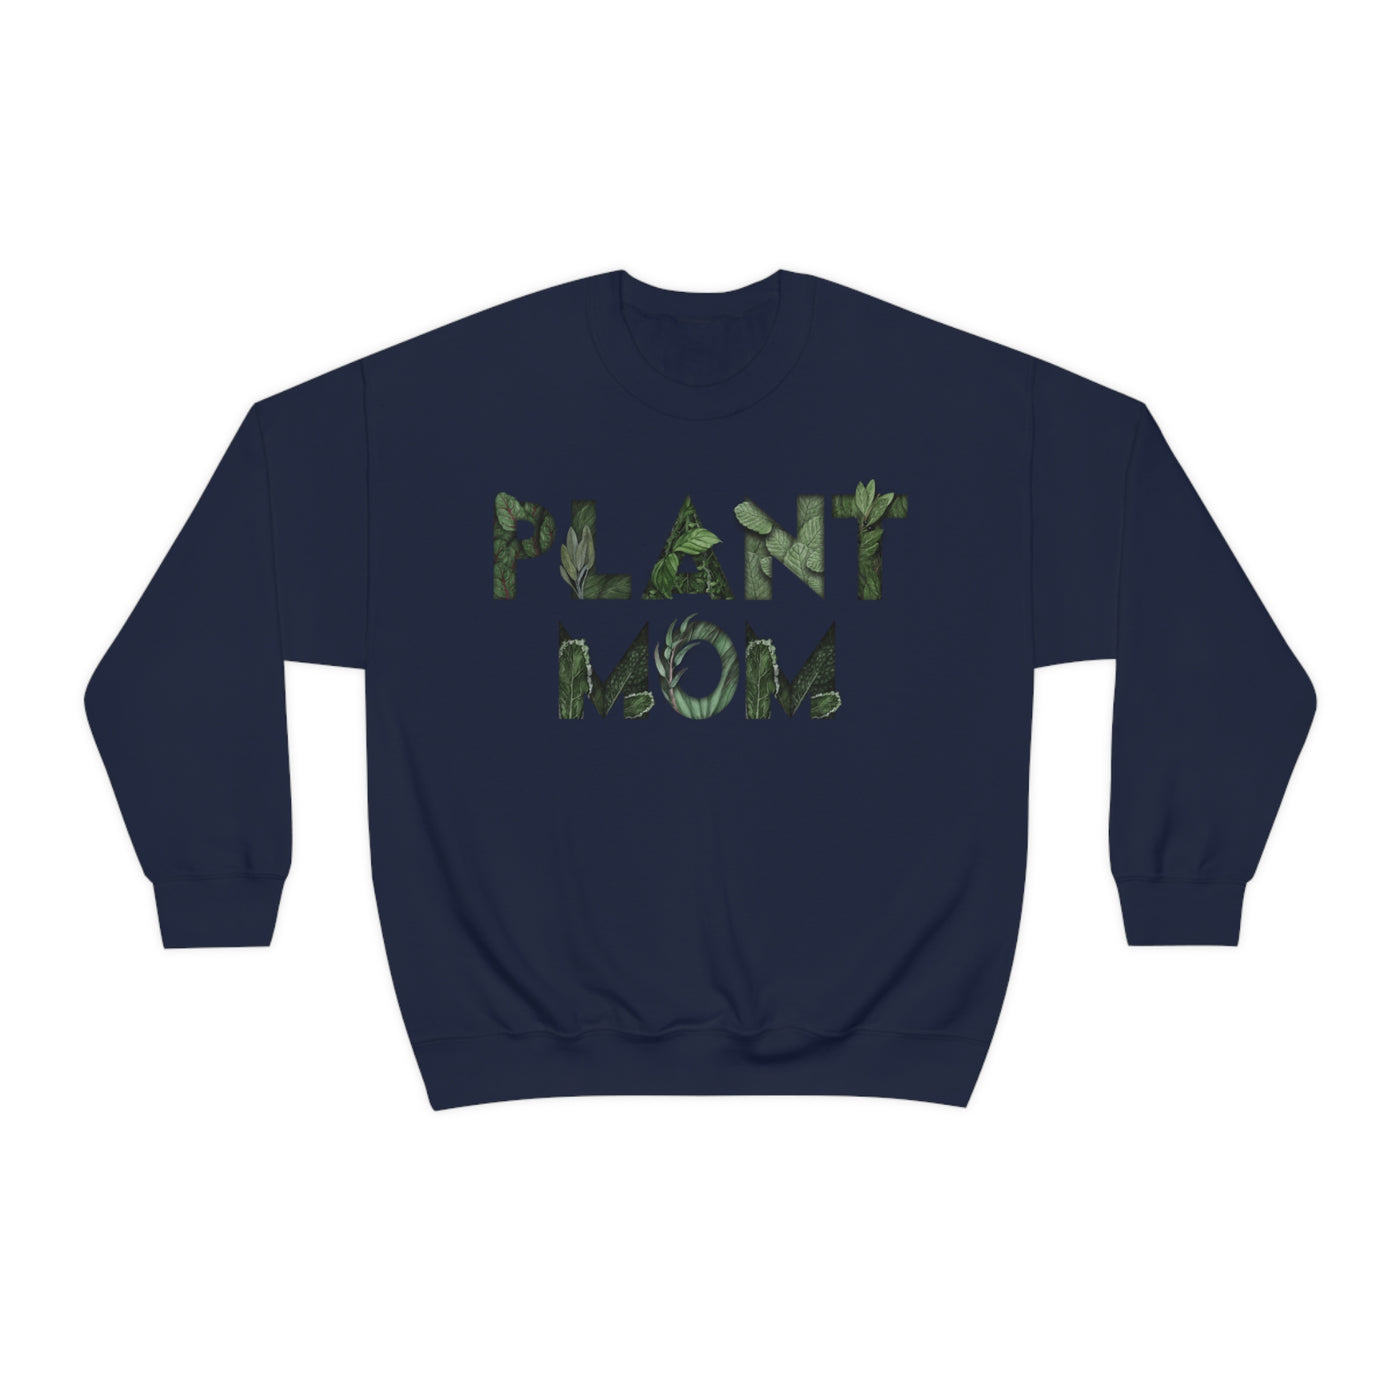 Plant Mom Crewneck Sweatshirt